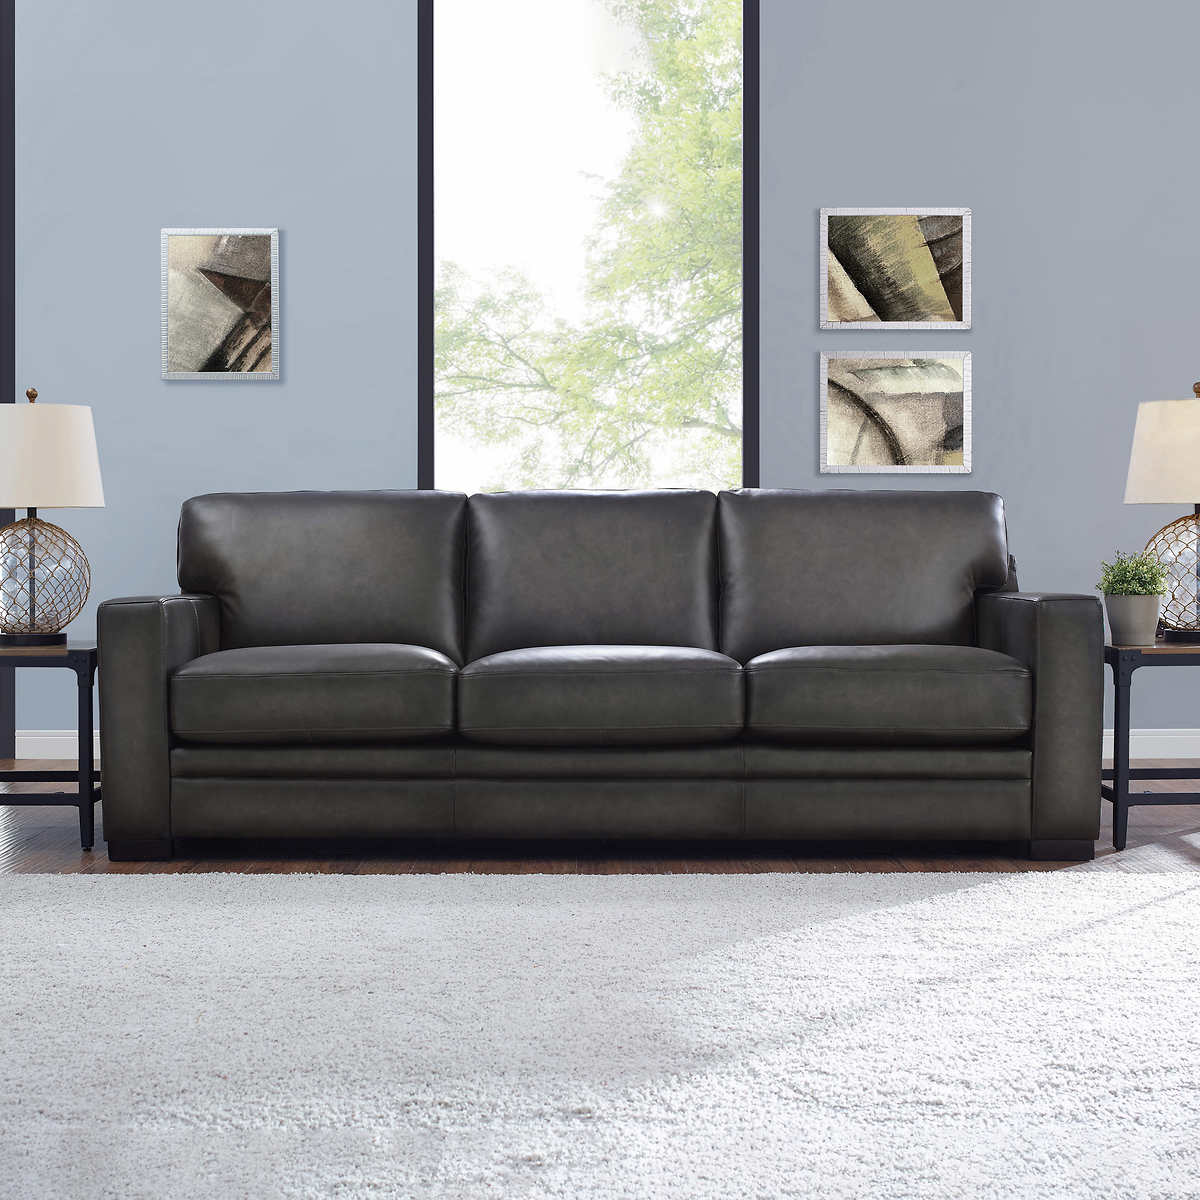 Luca Top Grain Leather Sofa Costco, Costco Leather Furniture Quality